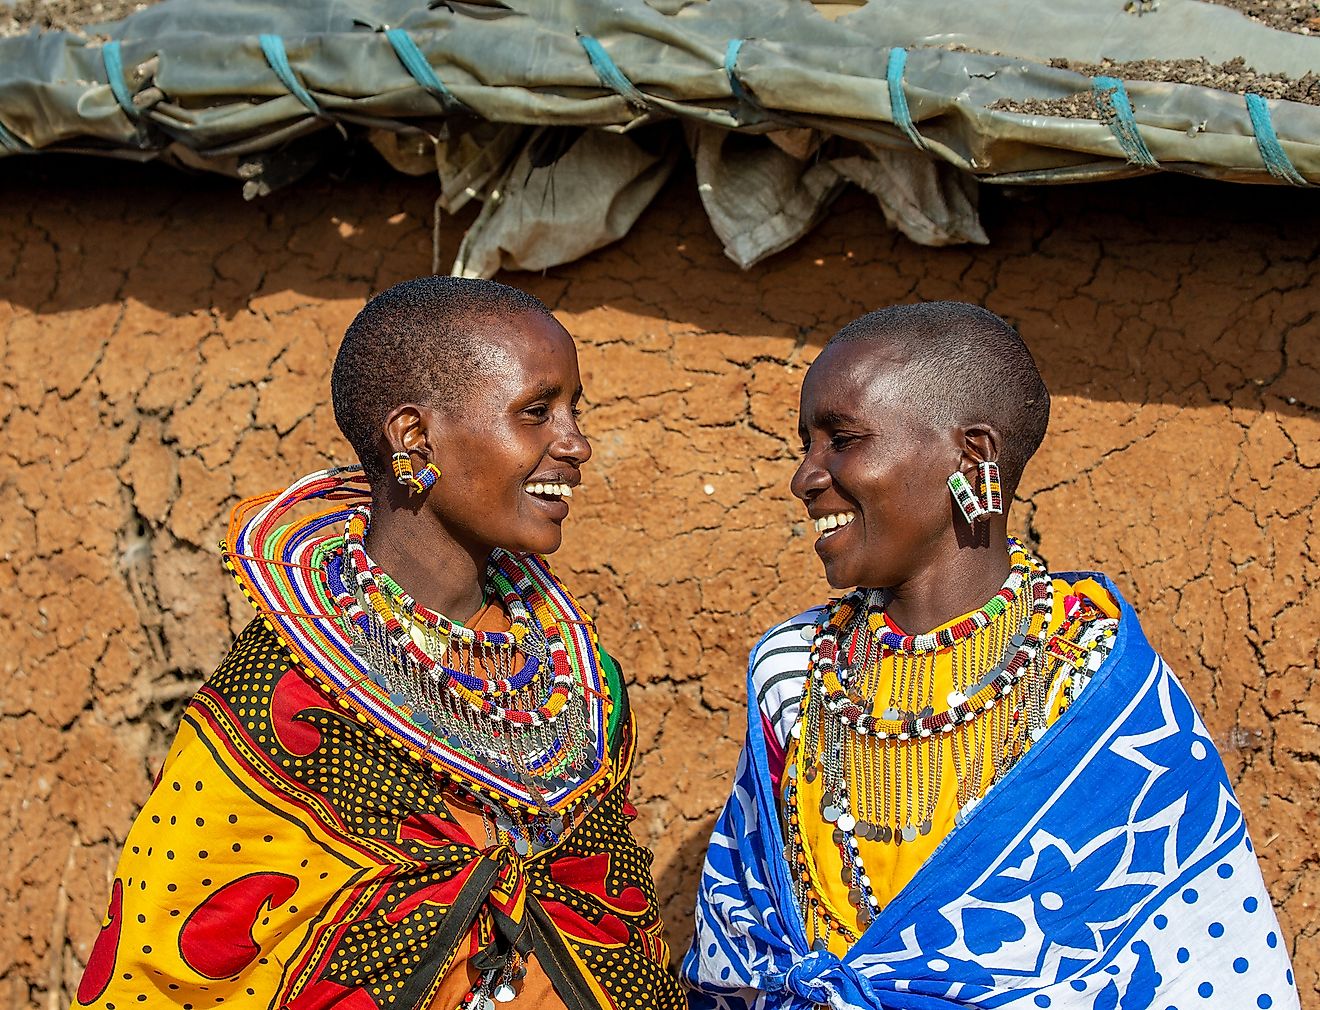 Maasai women in Tanzania in their traditional dress. Image credit: GUDKOV ANDREY/Shutterstock.com